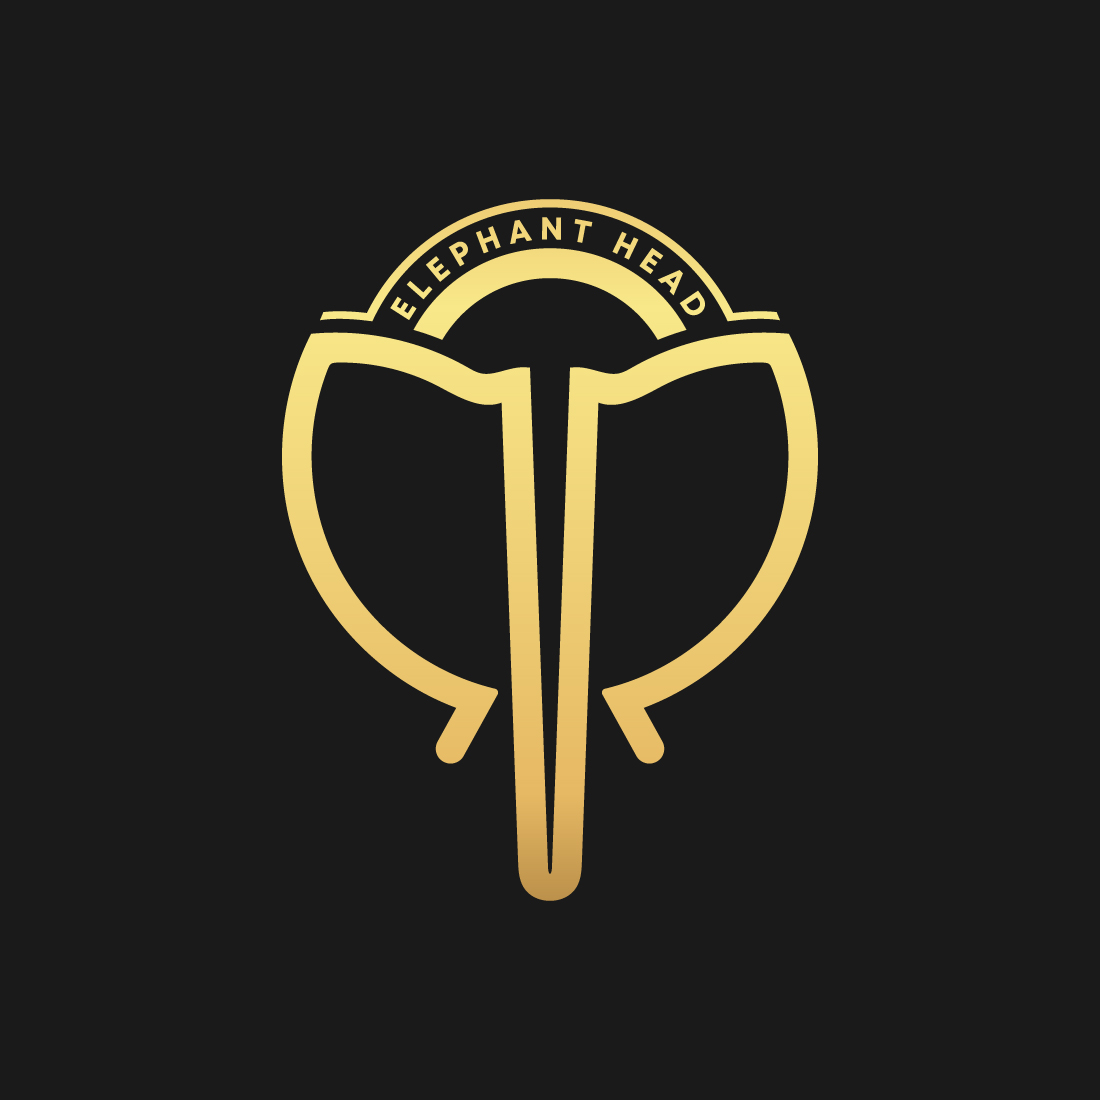 Elephant Head Logo preview image.